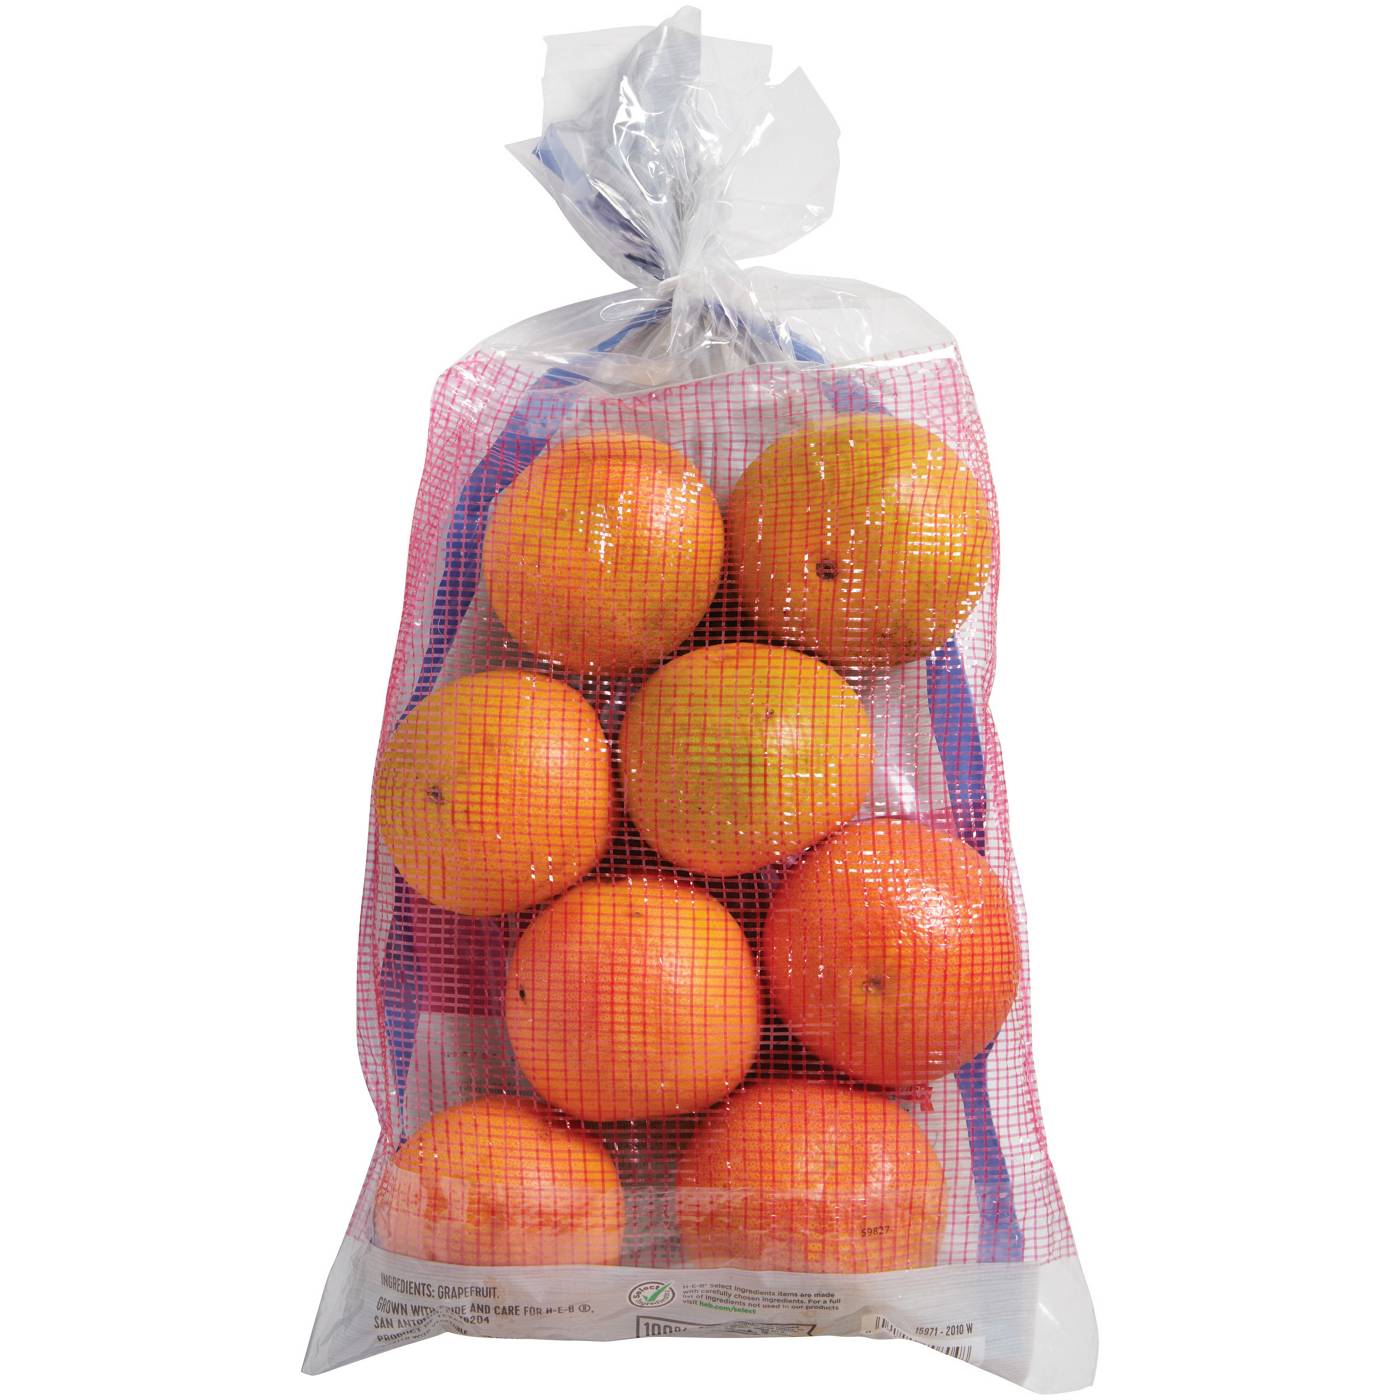 H-E-B Texas Roots Fresh Grapefruit; image 3 of 4